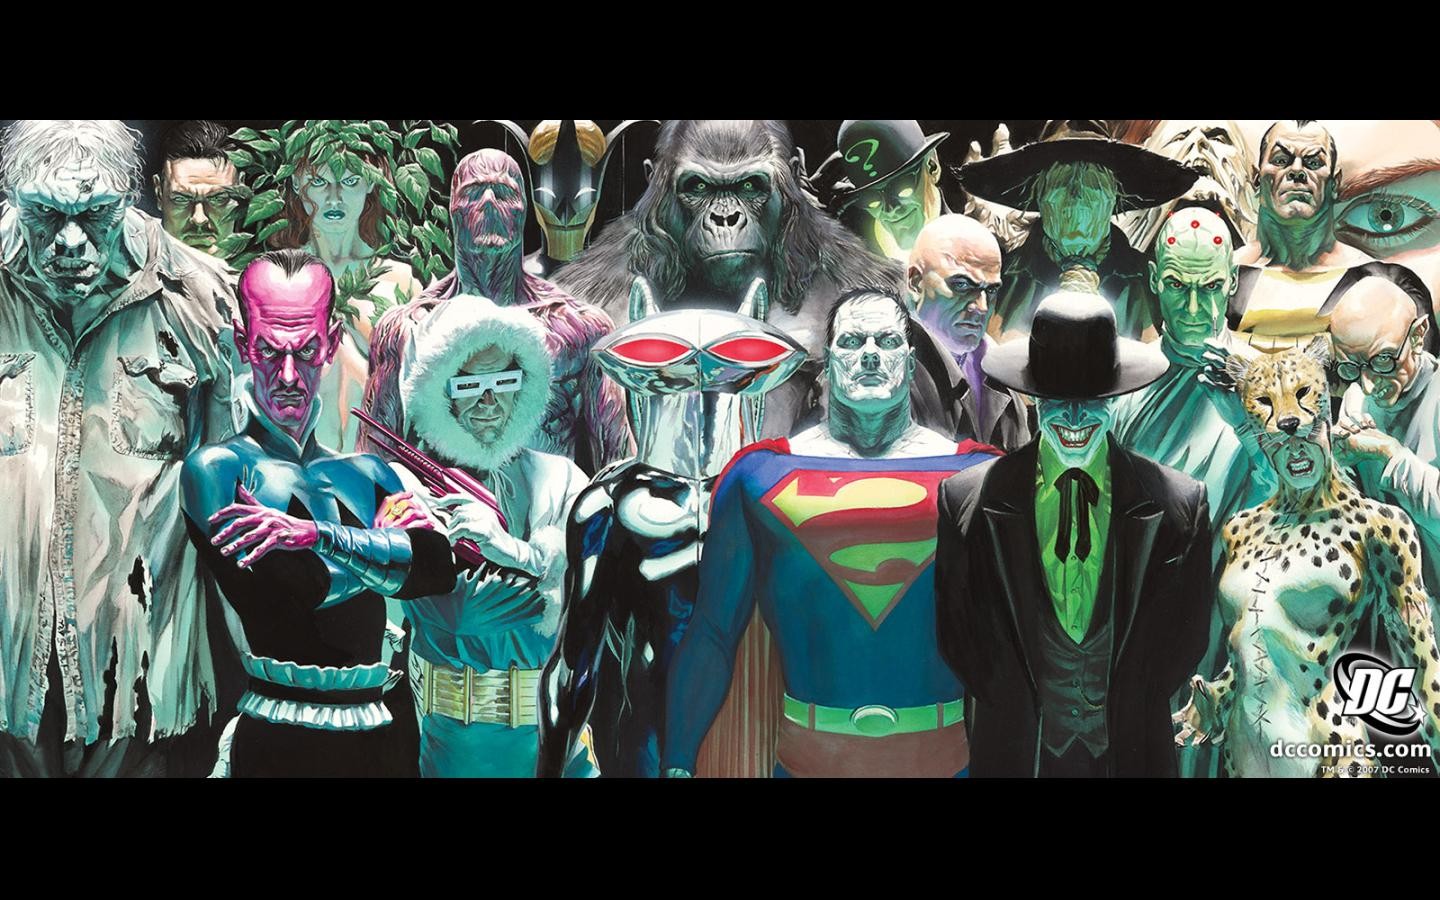 General 1440x900 DC Comics villains Bizarro Joker Brainiac Mr. Freeze Poison Ivy The Riddler Scarecrow (character) Hugo Strange Lex Luthor Sinestro Alex Ross